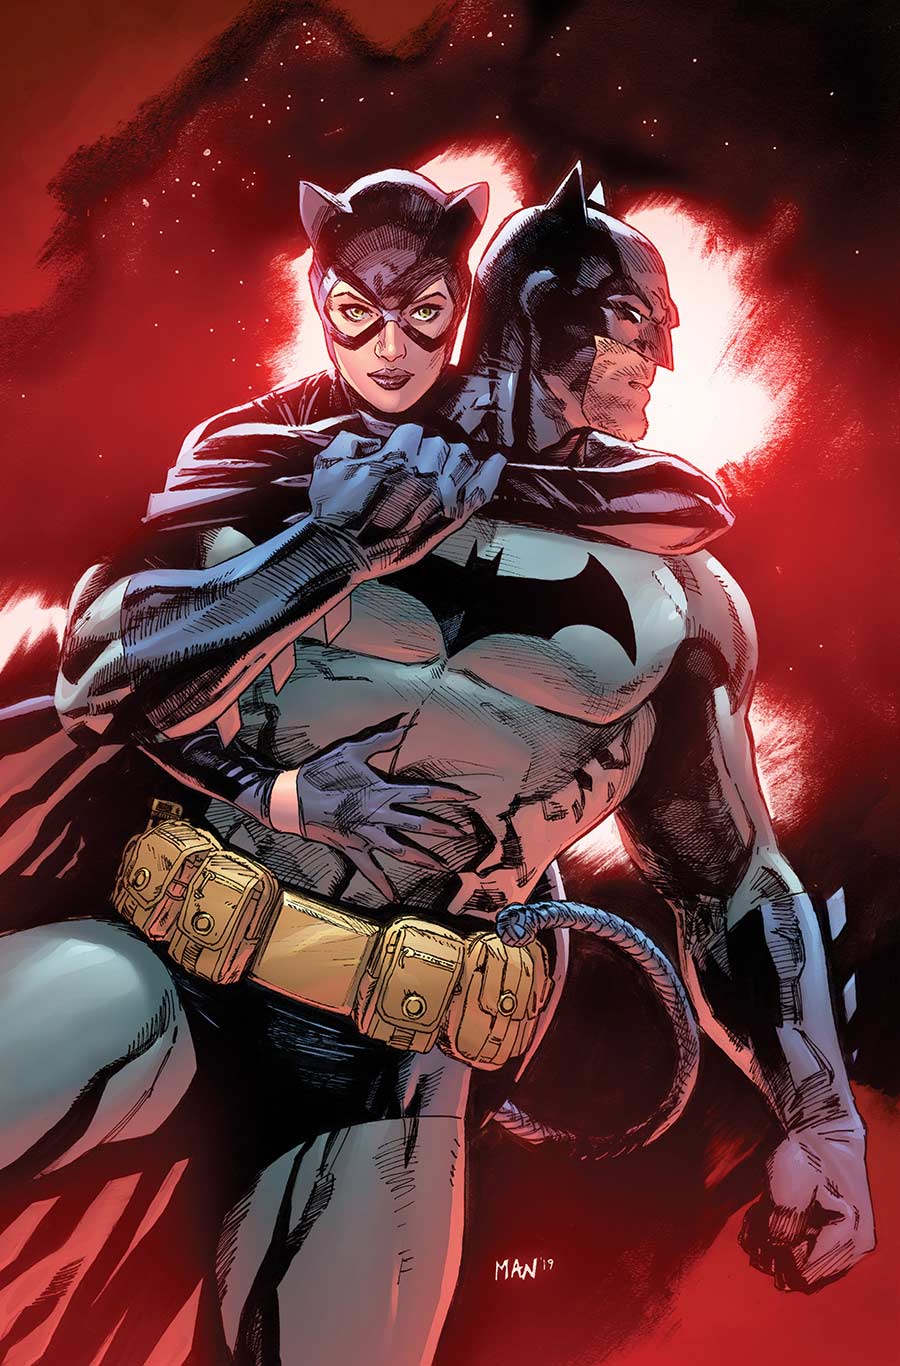 Batman/Catwoman